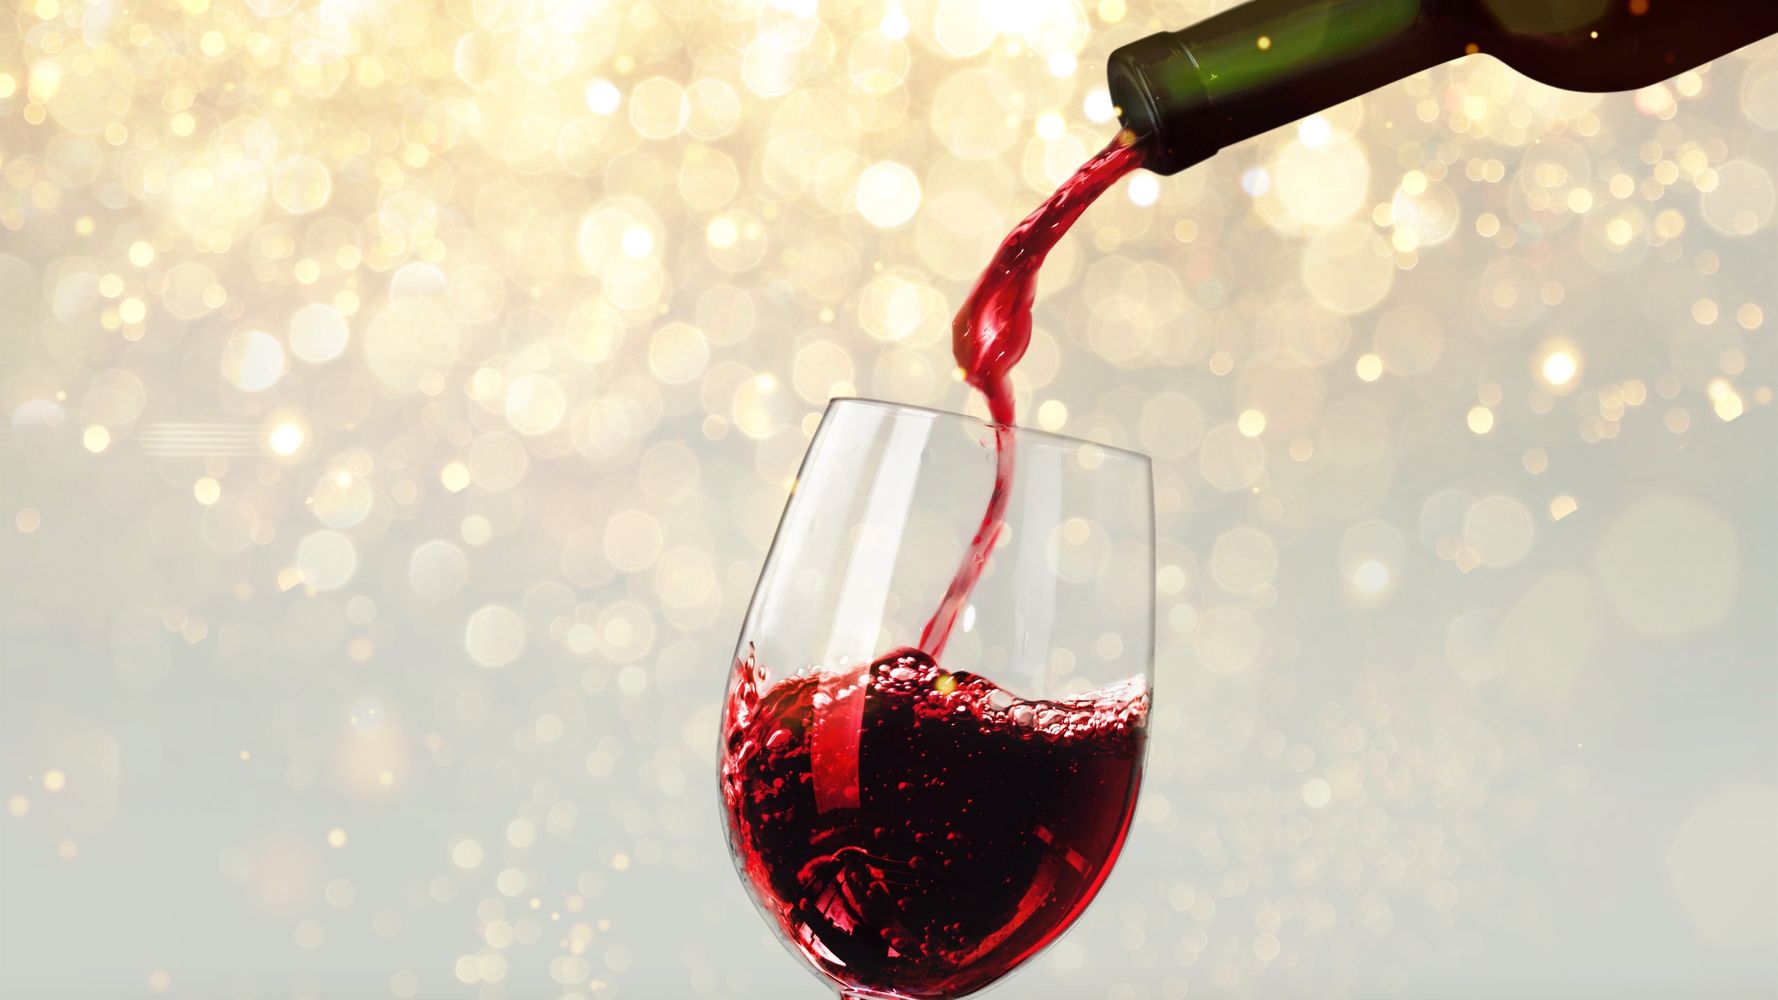 God vin til billige penge - Tips og tricks fra eksperterne